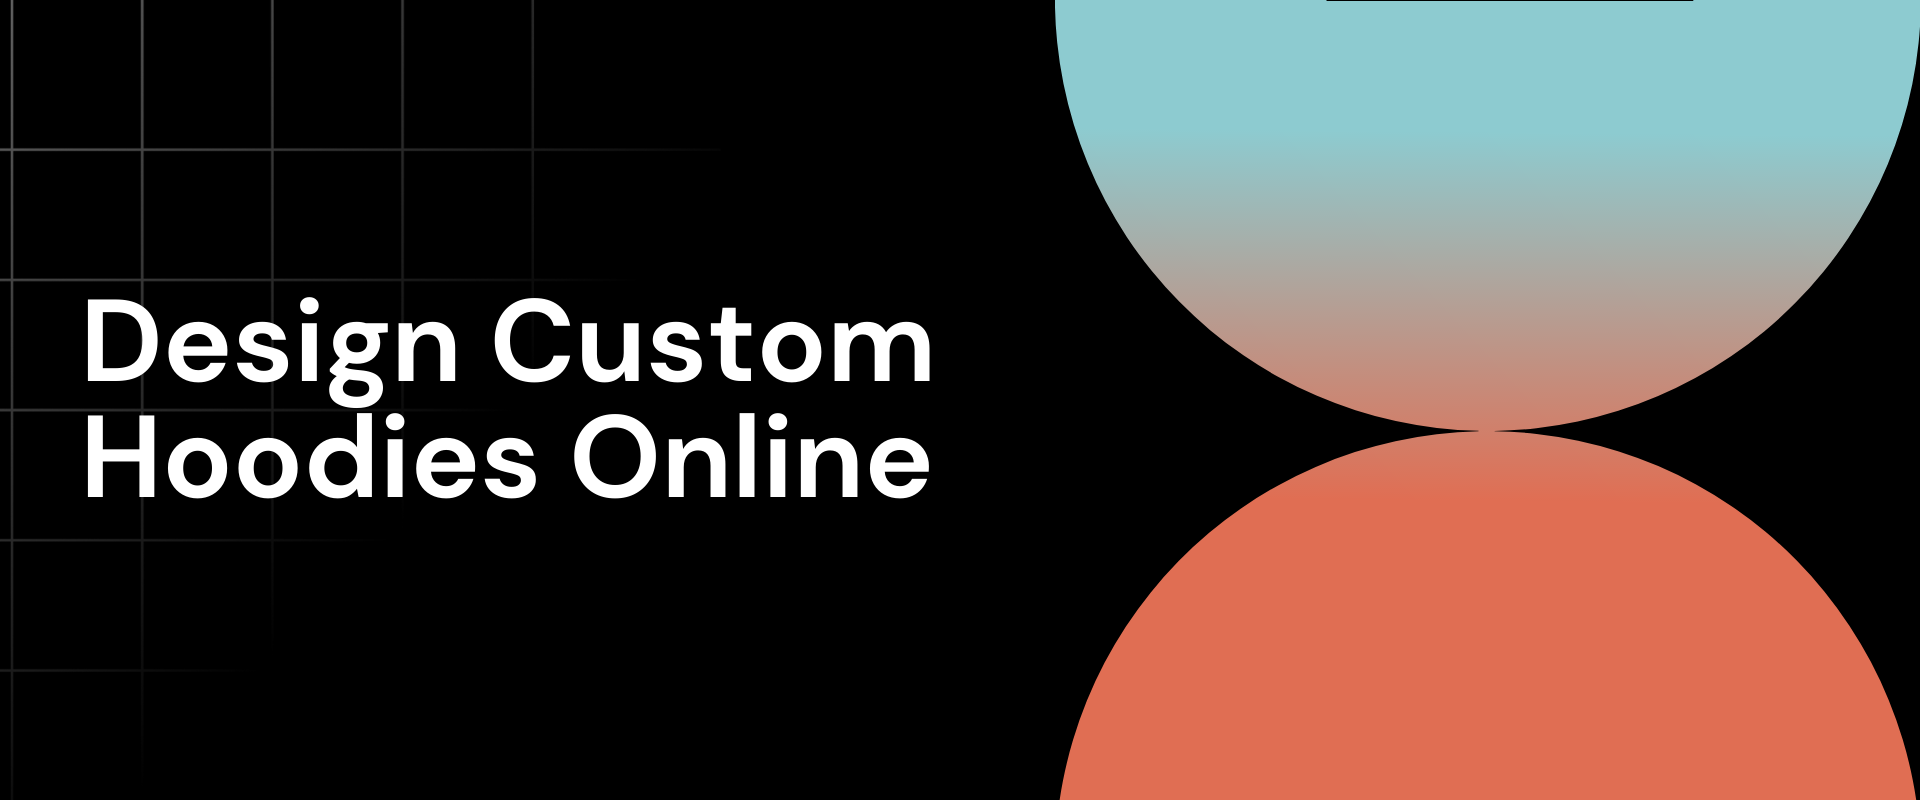 Design Your Custom Hoodies